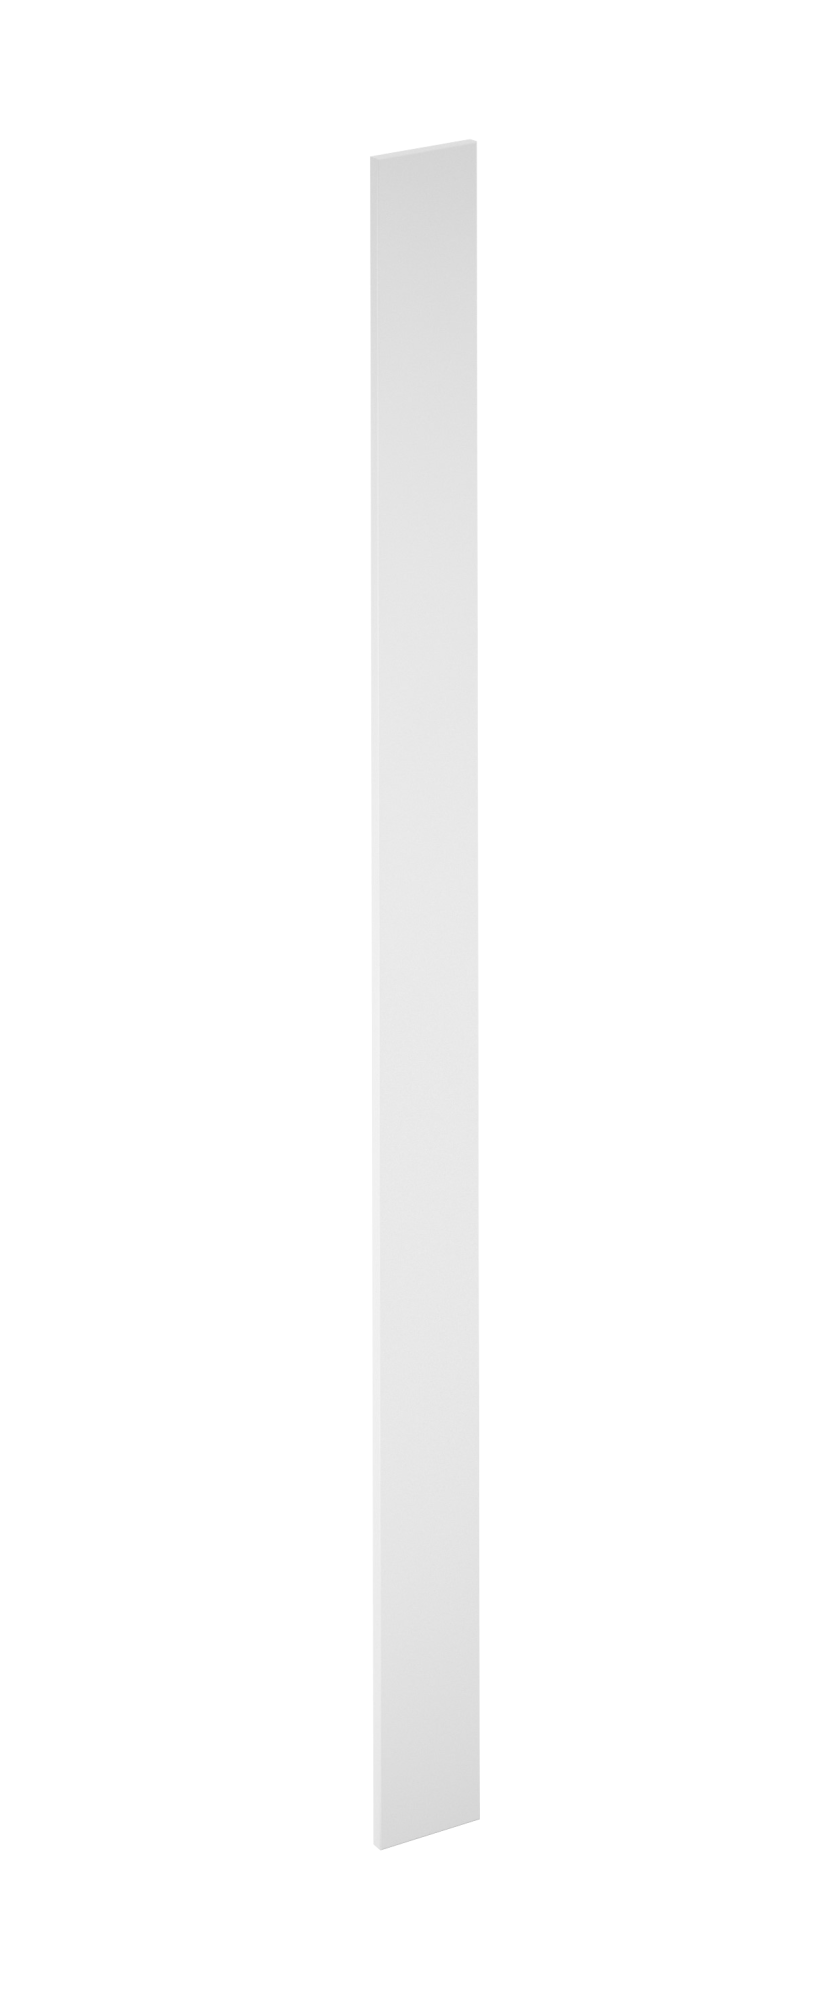 Puerta para mueble de cocina toscane blanco mate h 214.4 x l 15 cm